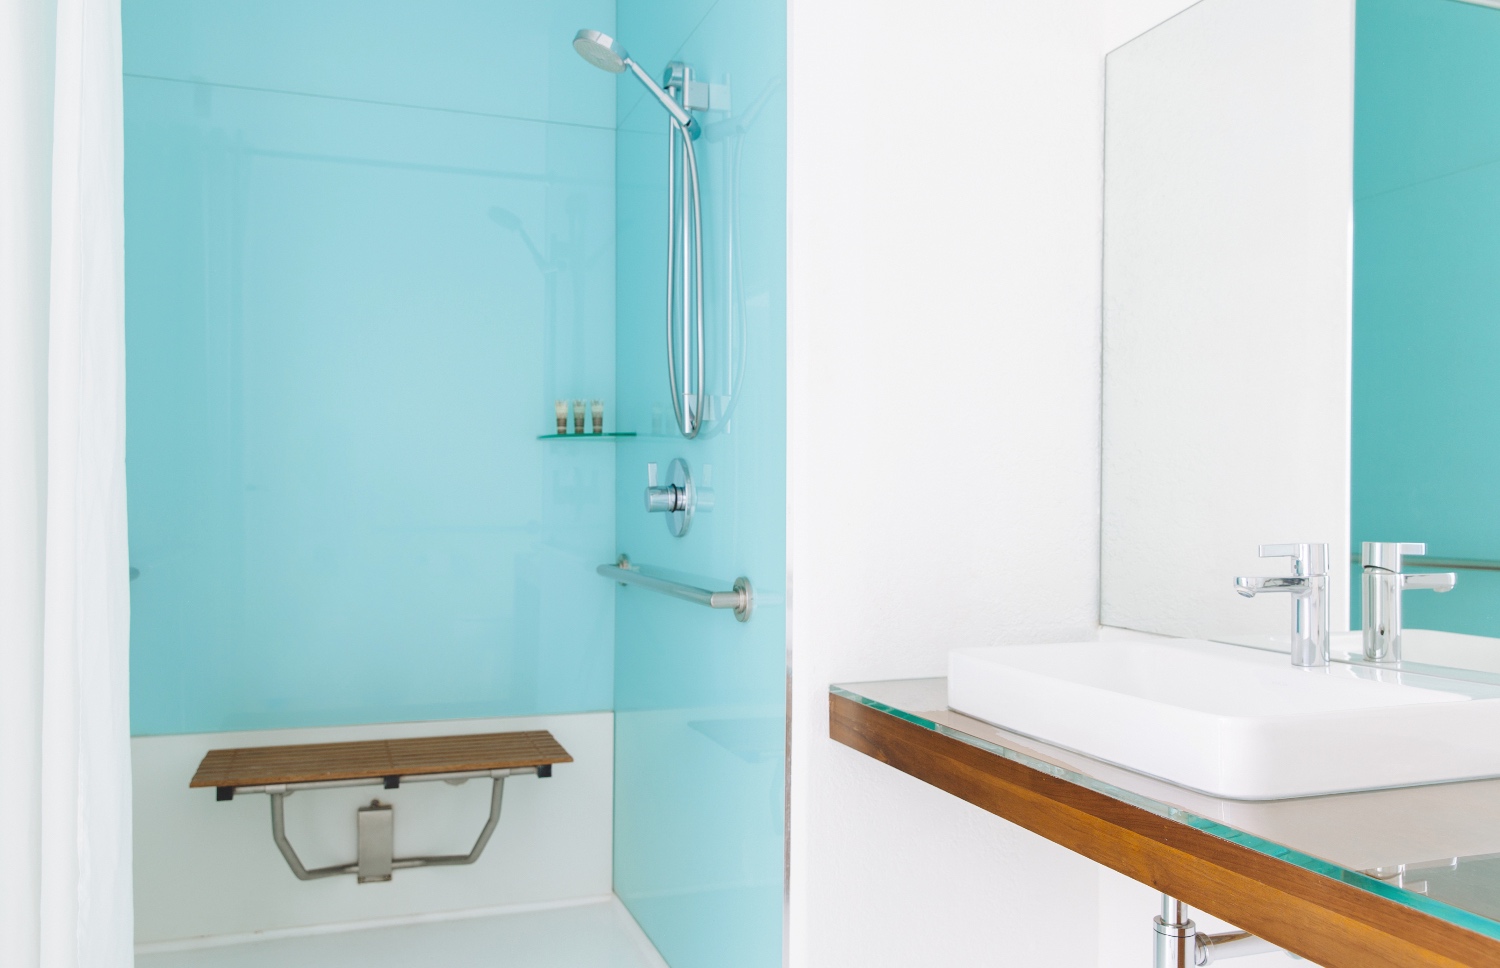 Poolside King Room Alcazar Hotel-Bathroom sink and shower seat